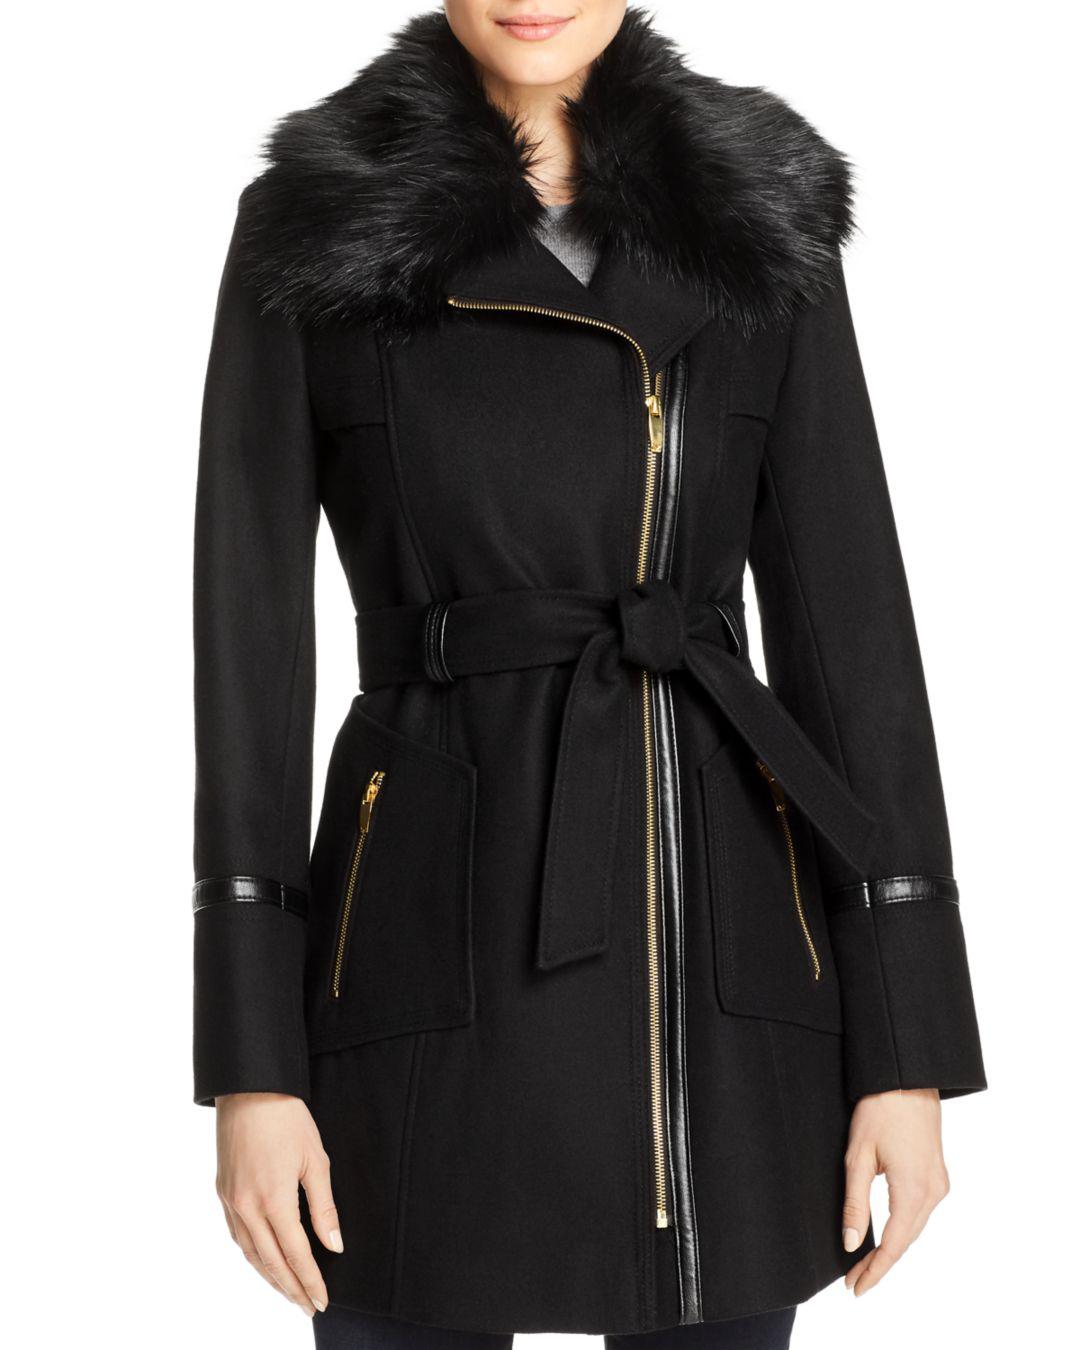 Via Spiga Faux Fur-collar Asymmetric Belted Coat in Black - Lyst